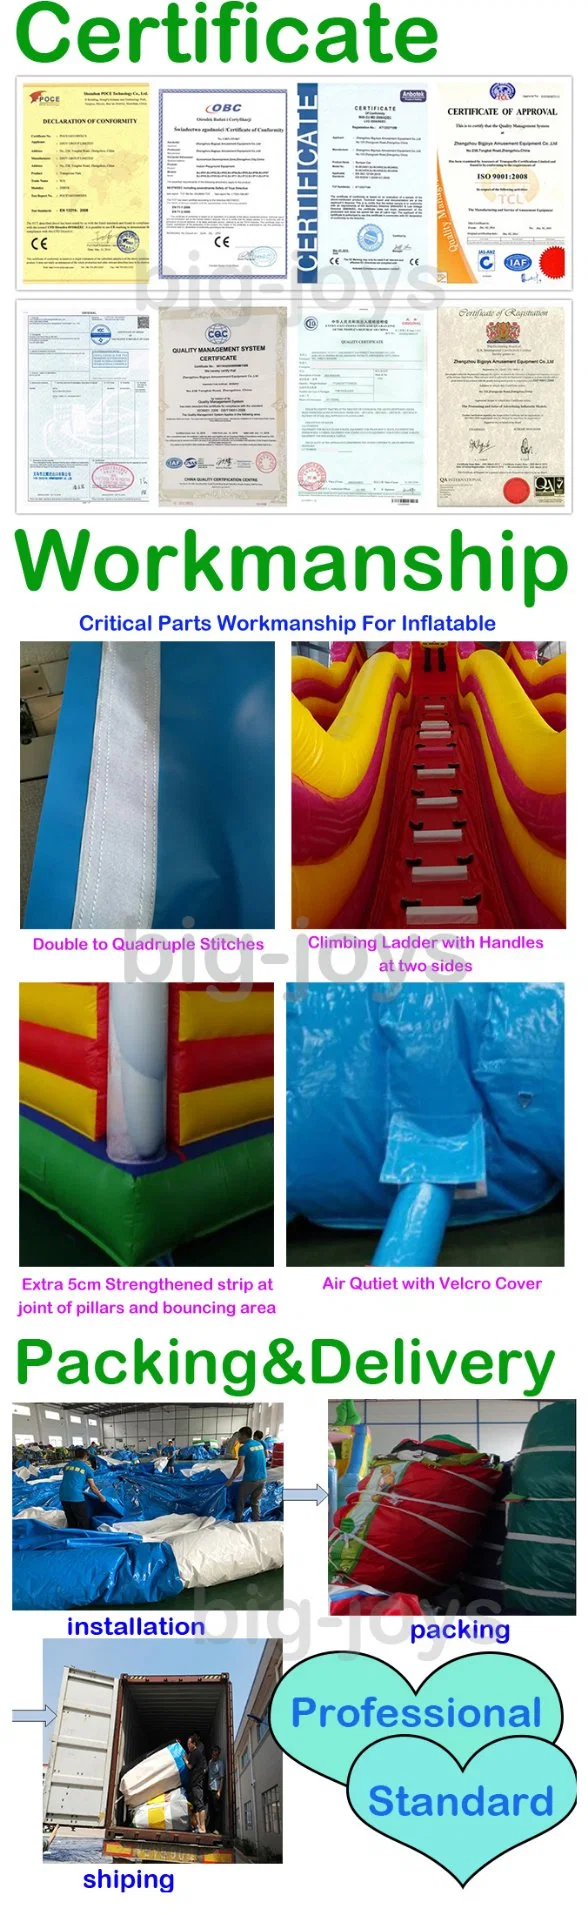 Inflatable Basketball Game, Inflatable Slide with Basketball Game for Sale